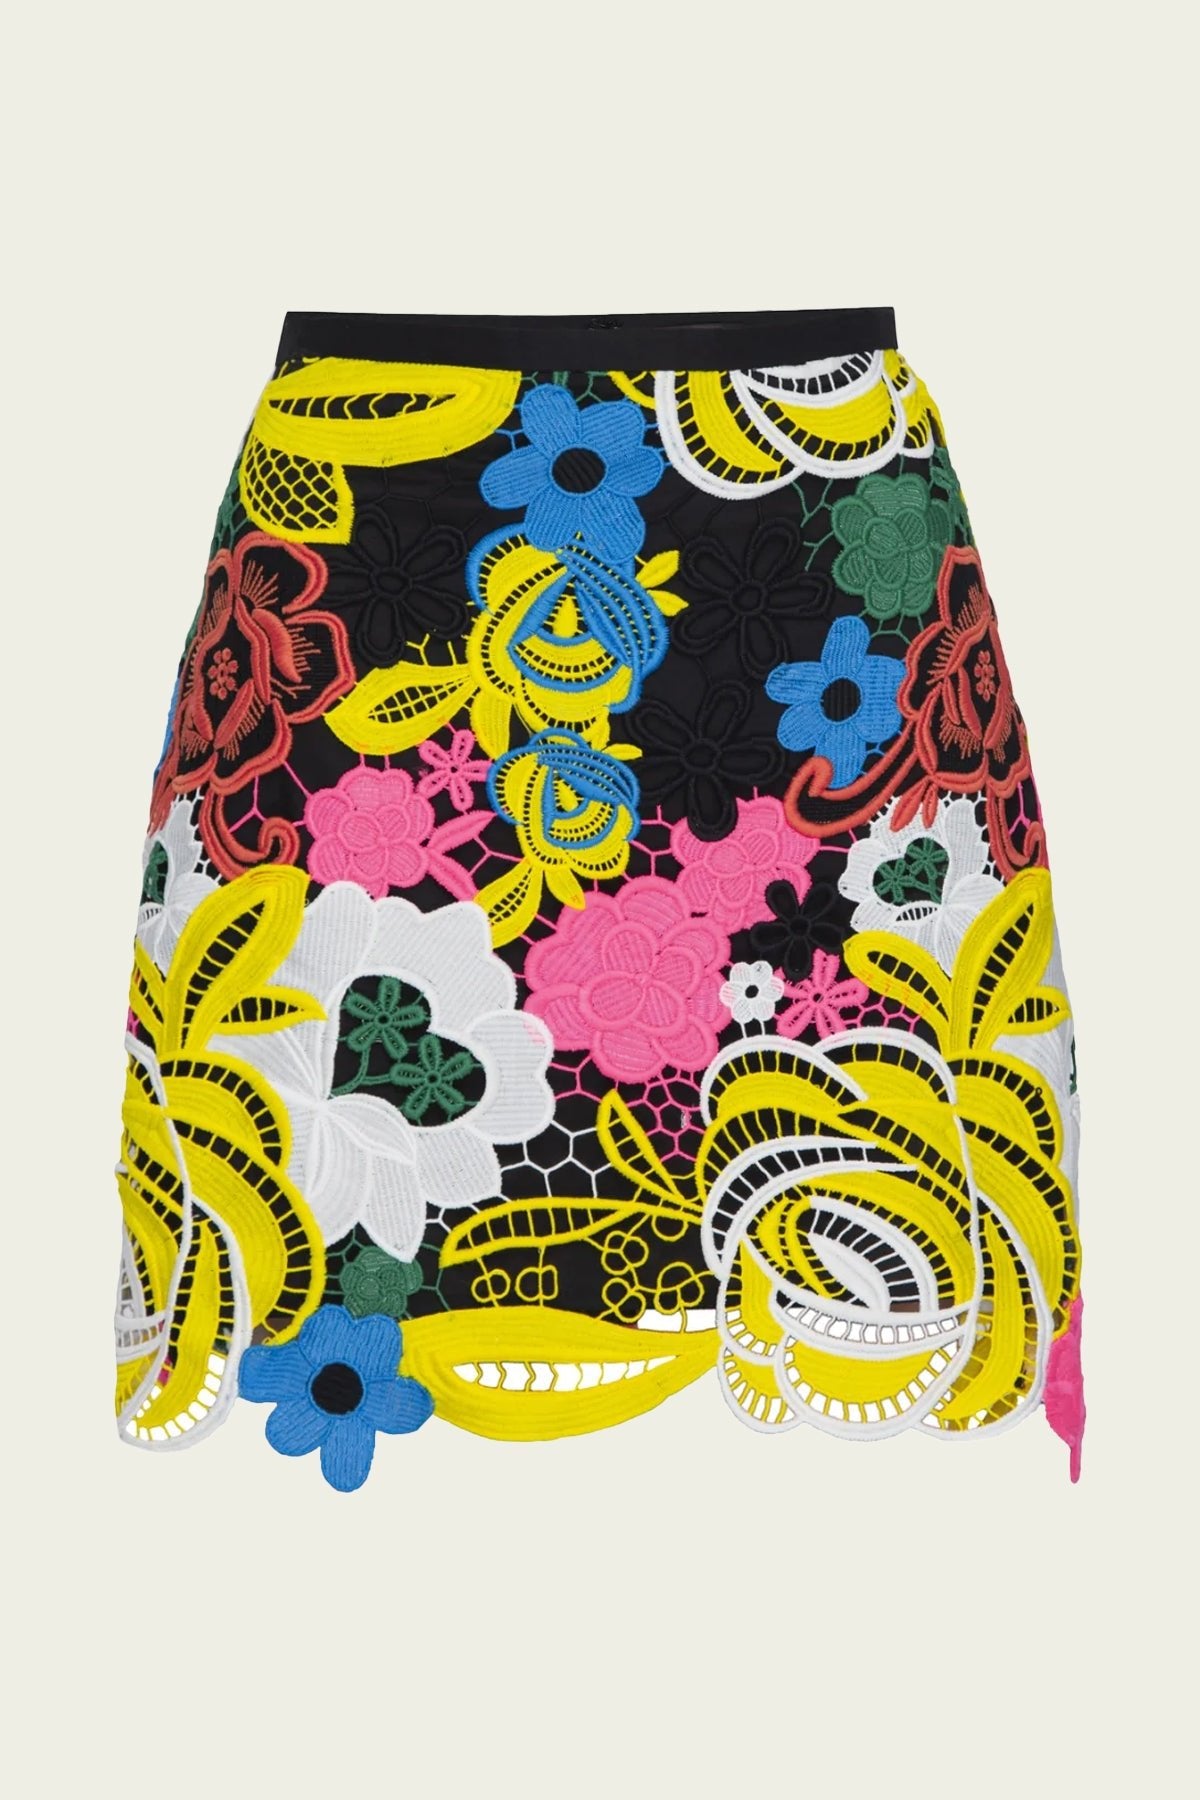 Topanga Canyon Skirt in Electric Floral - shop - olivia.com